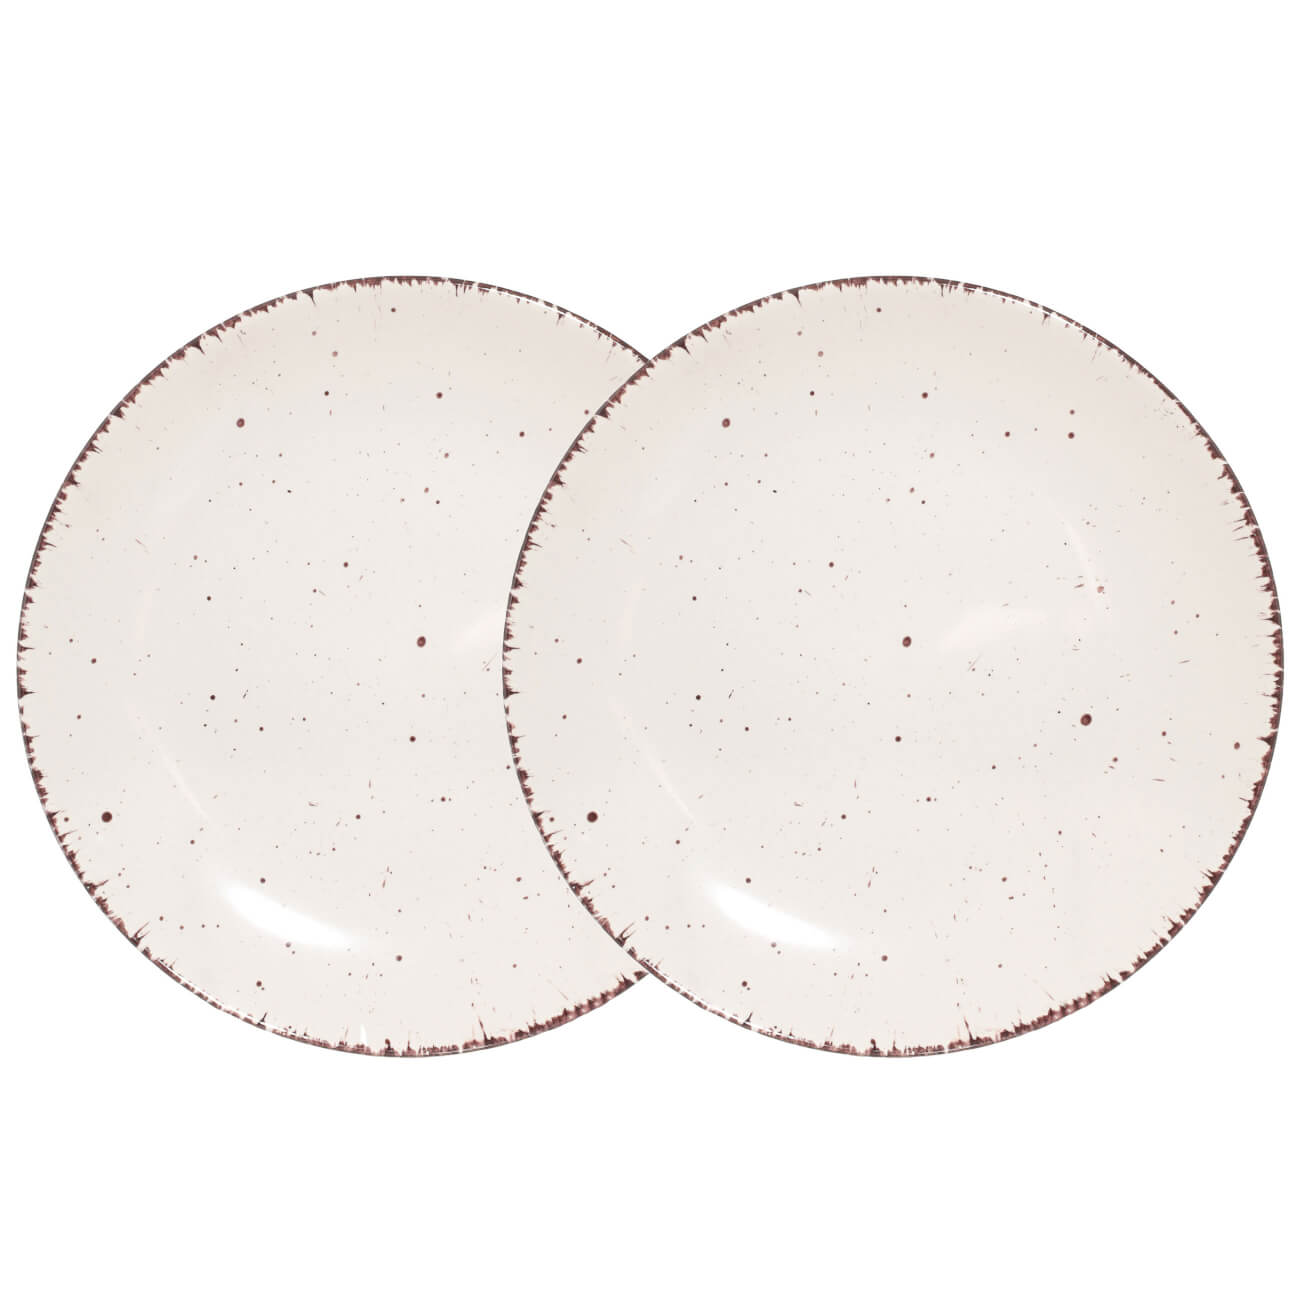 Тарелка закусочная, 21 см, 2 шт, керамика, бежевая, в крапинку, Speckled